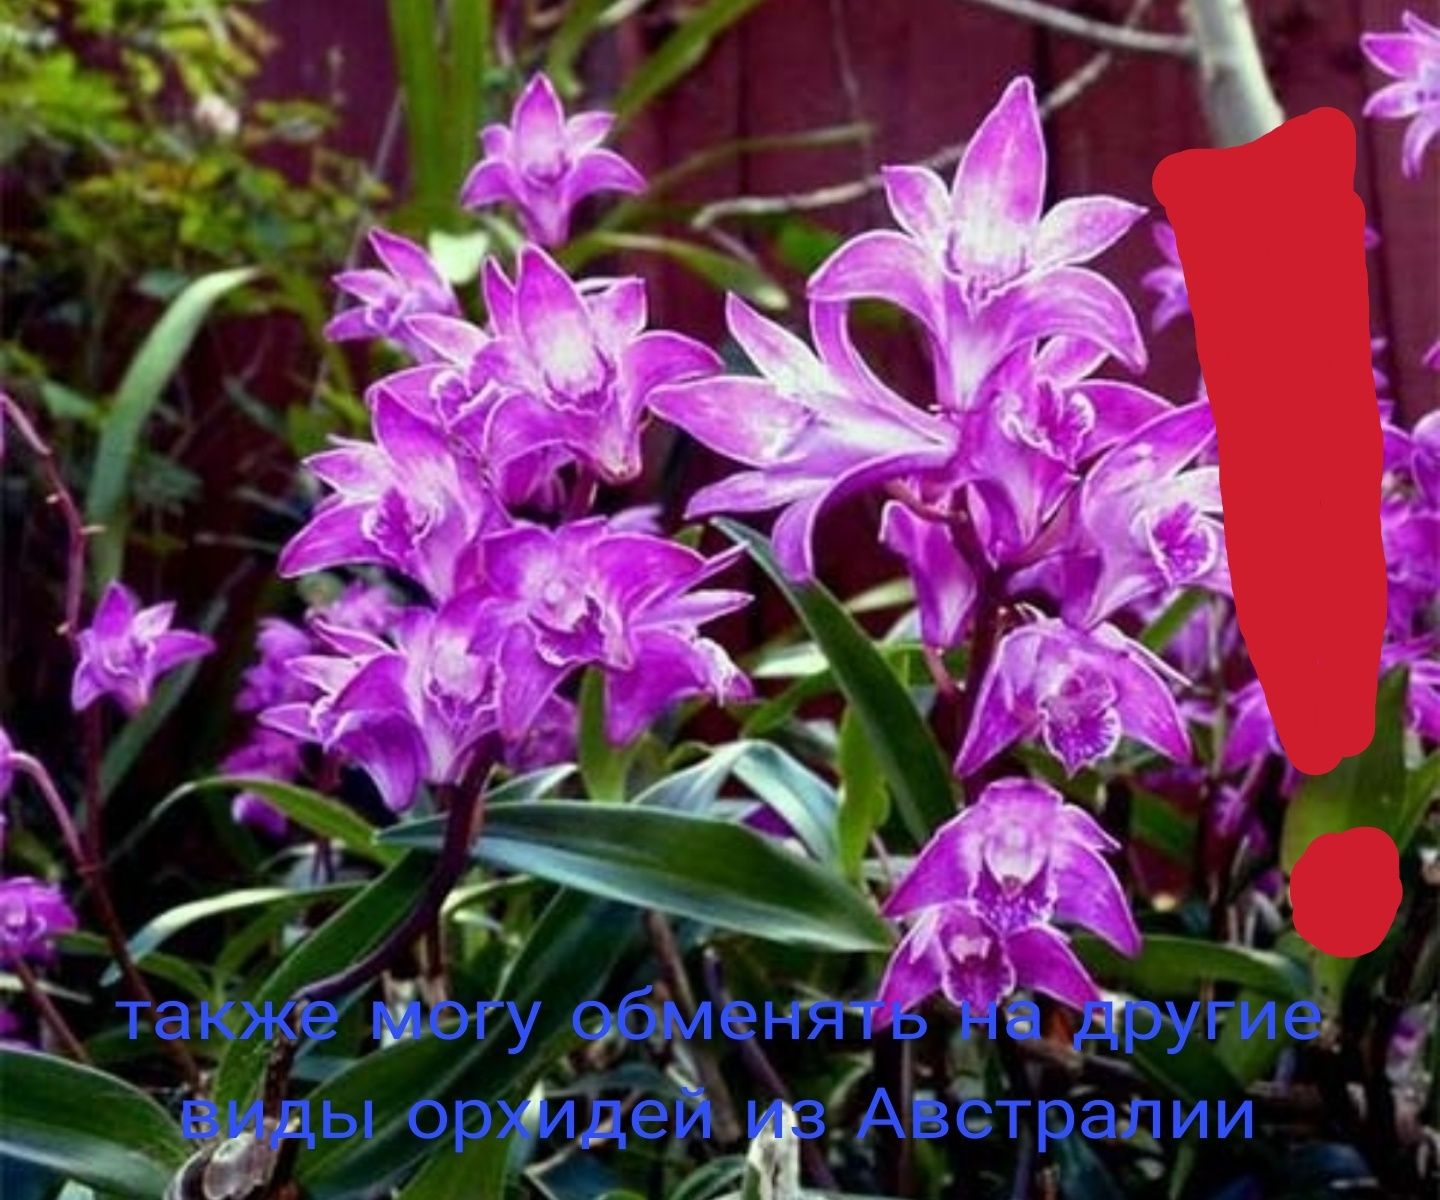 Dendrobium kingianum Berry Oda возможен обмен на виды из австралии